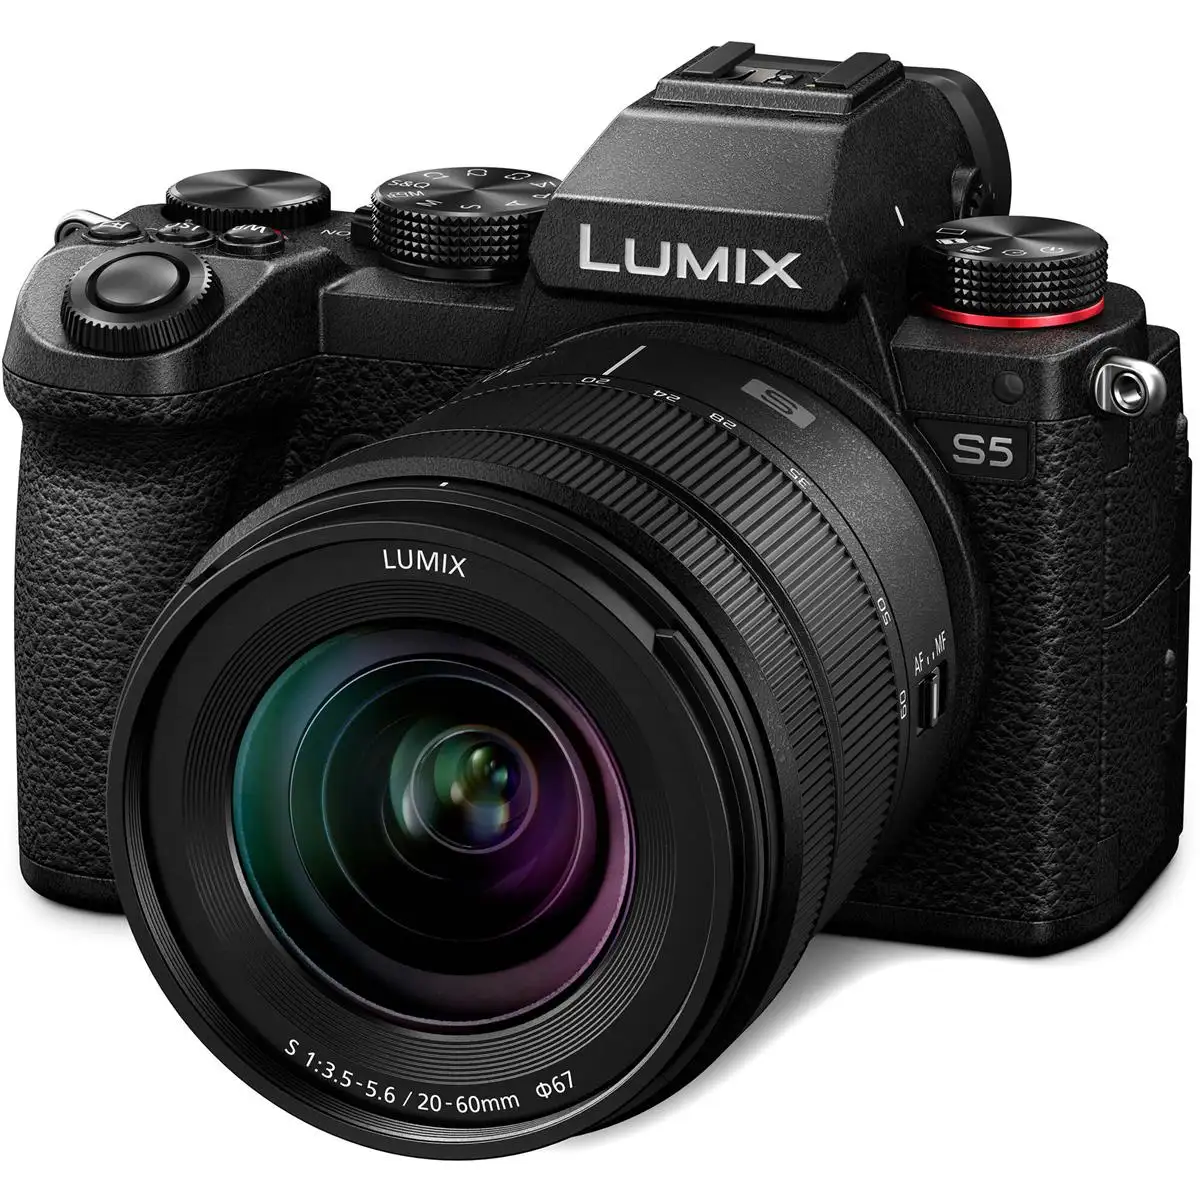 P.anasonic Lumix DC-S5 Mirrorless Camera, Lumix S 20-60mm f/3.5-5.6 L-Mount Lens